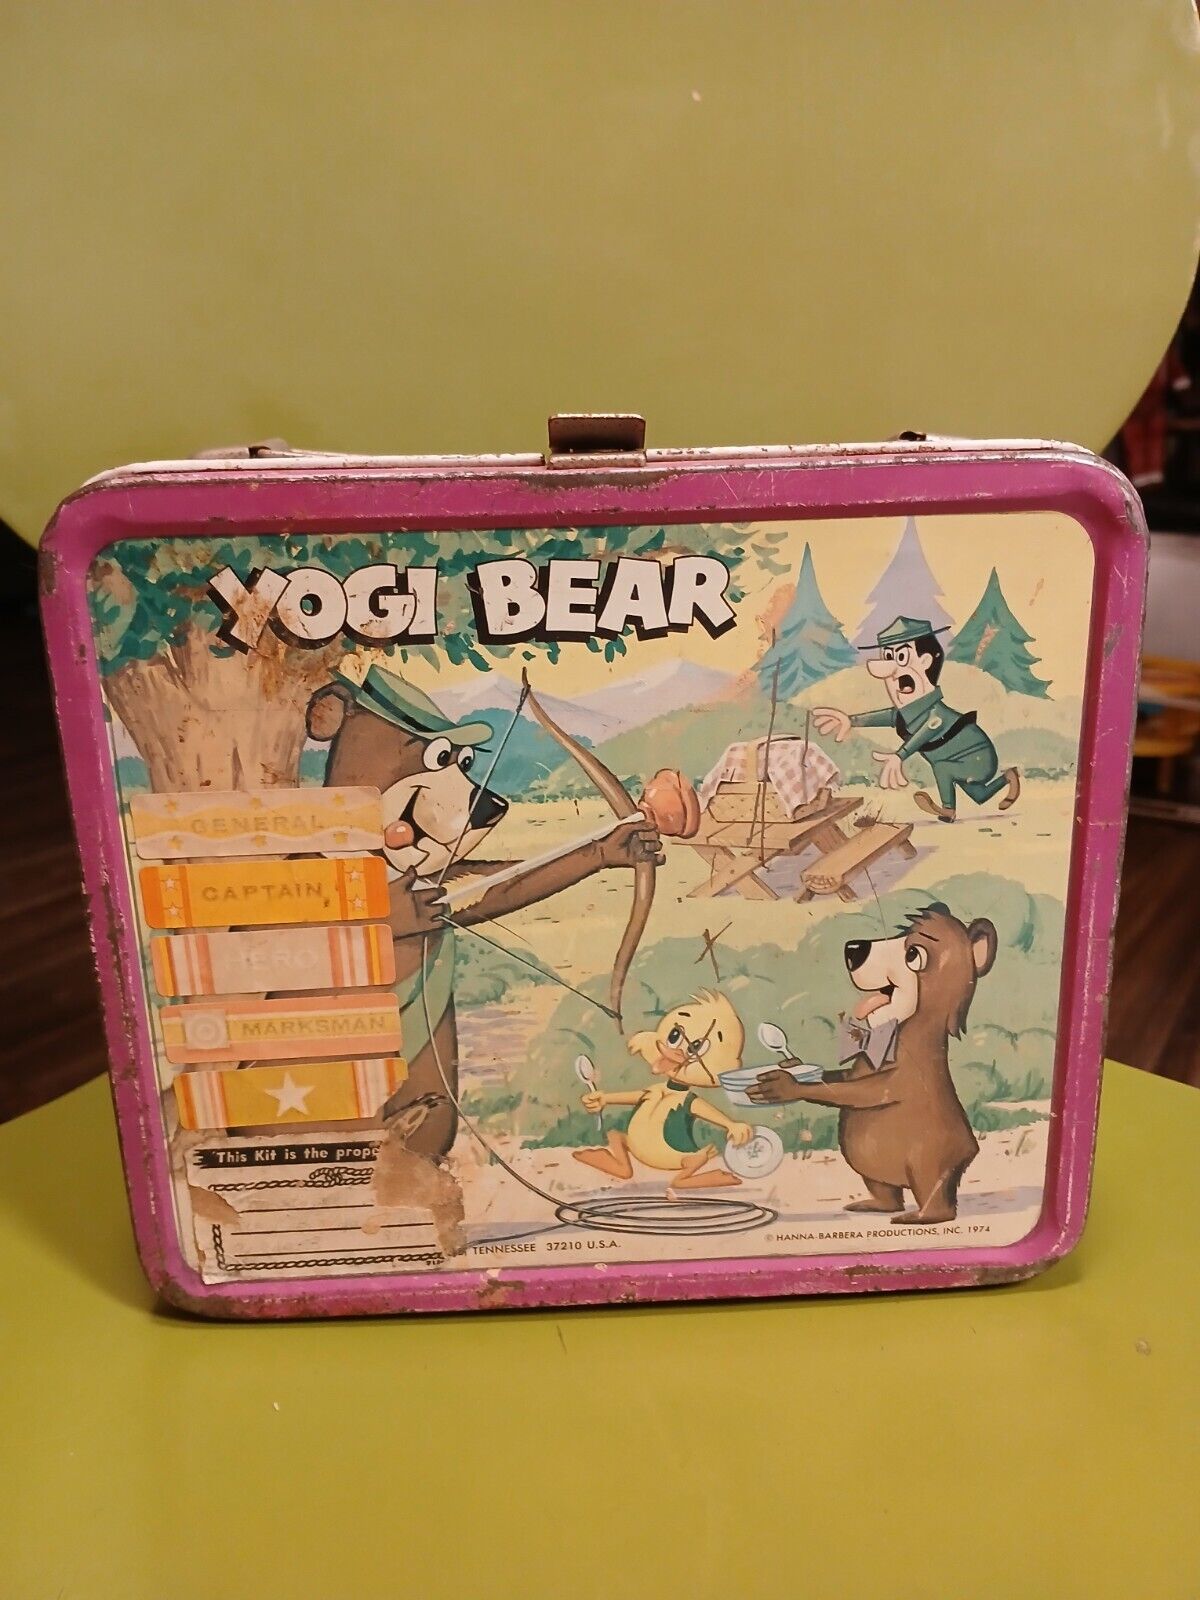 Vintage 1974 Yogi Bear Lunch box - missing handle